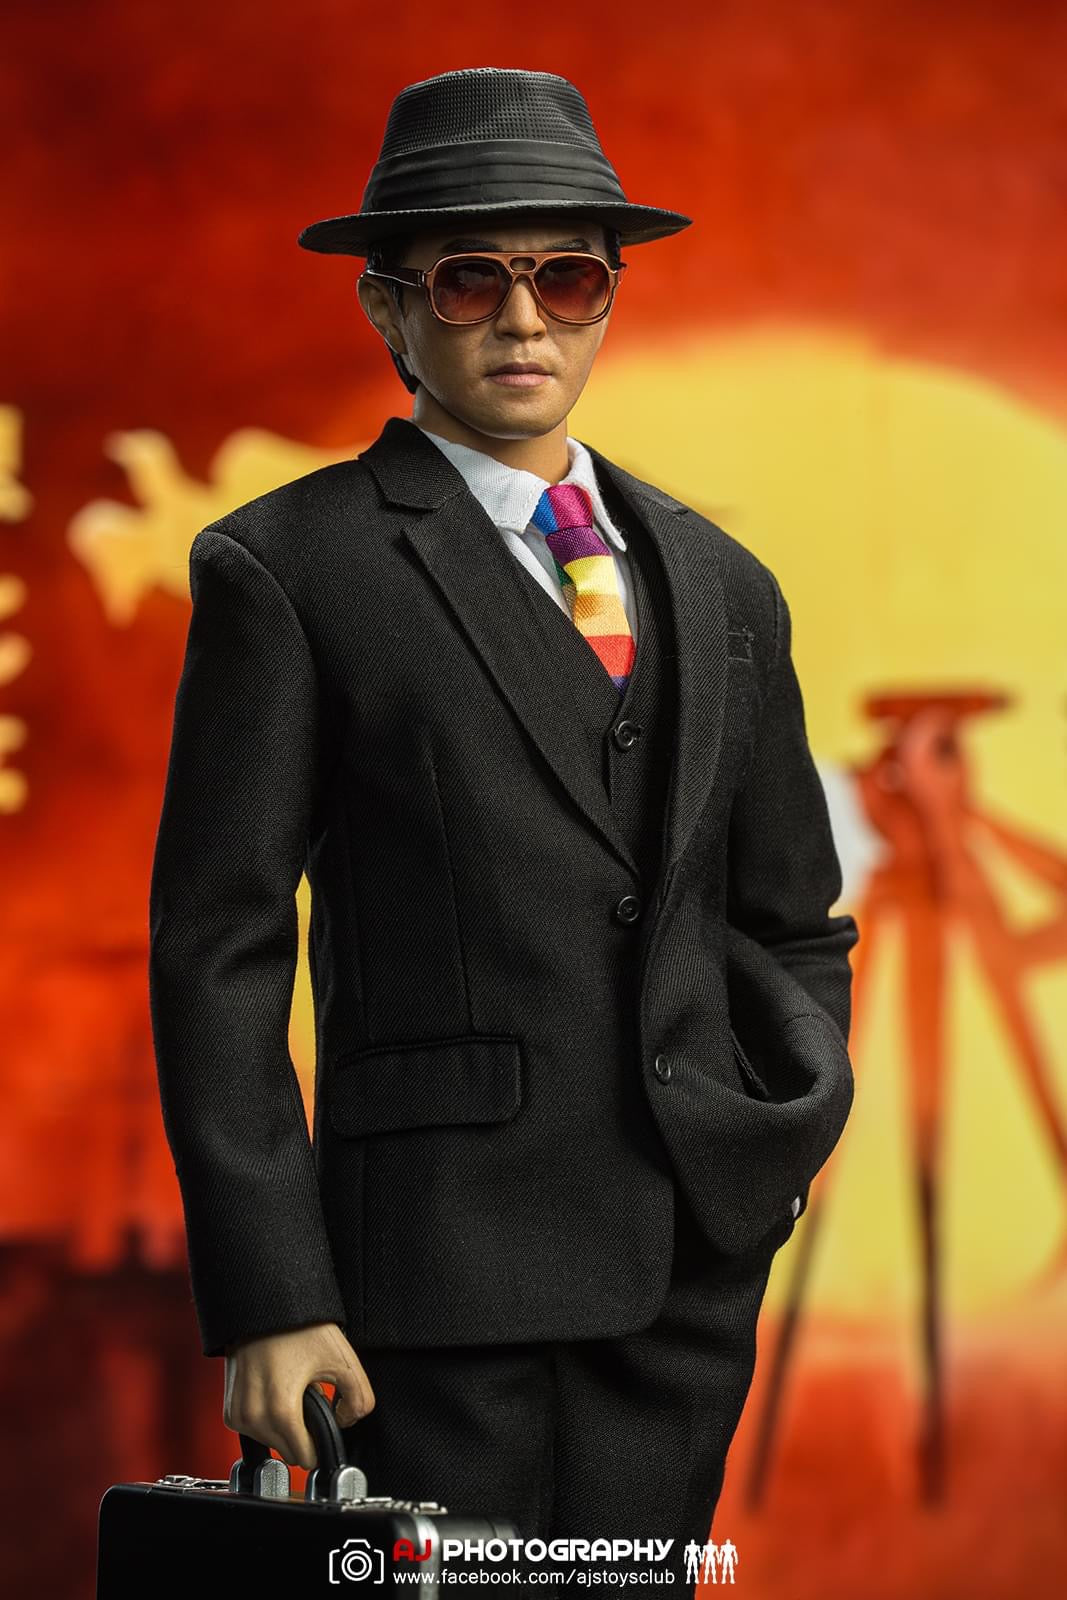 Pedido Figura SPY 007 marca Ace Toyz AT-012 escala 1/6